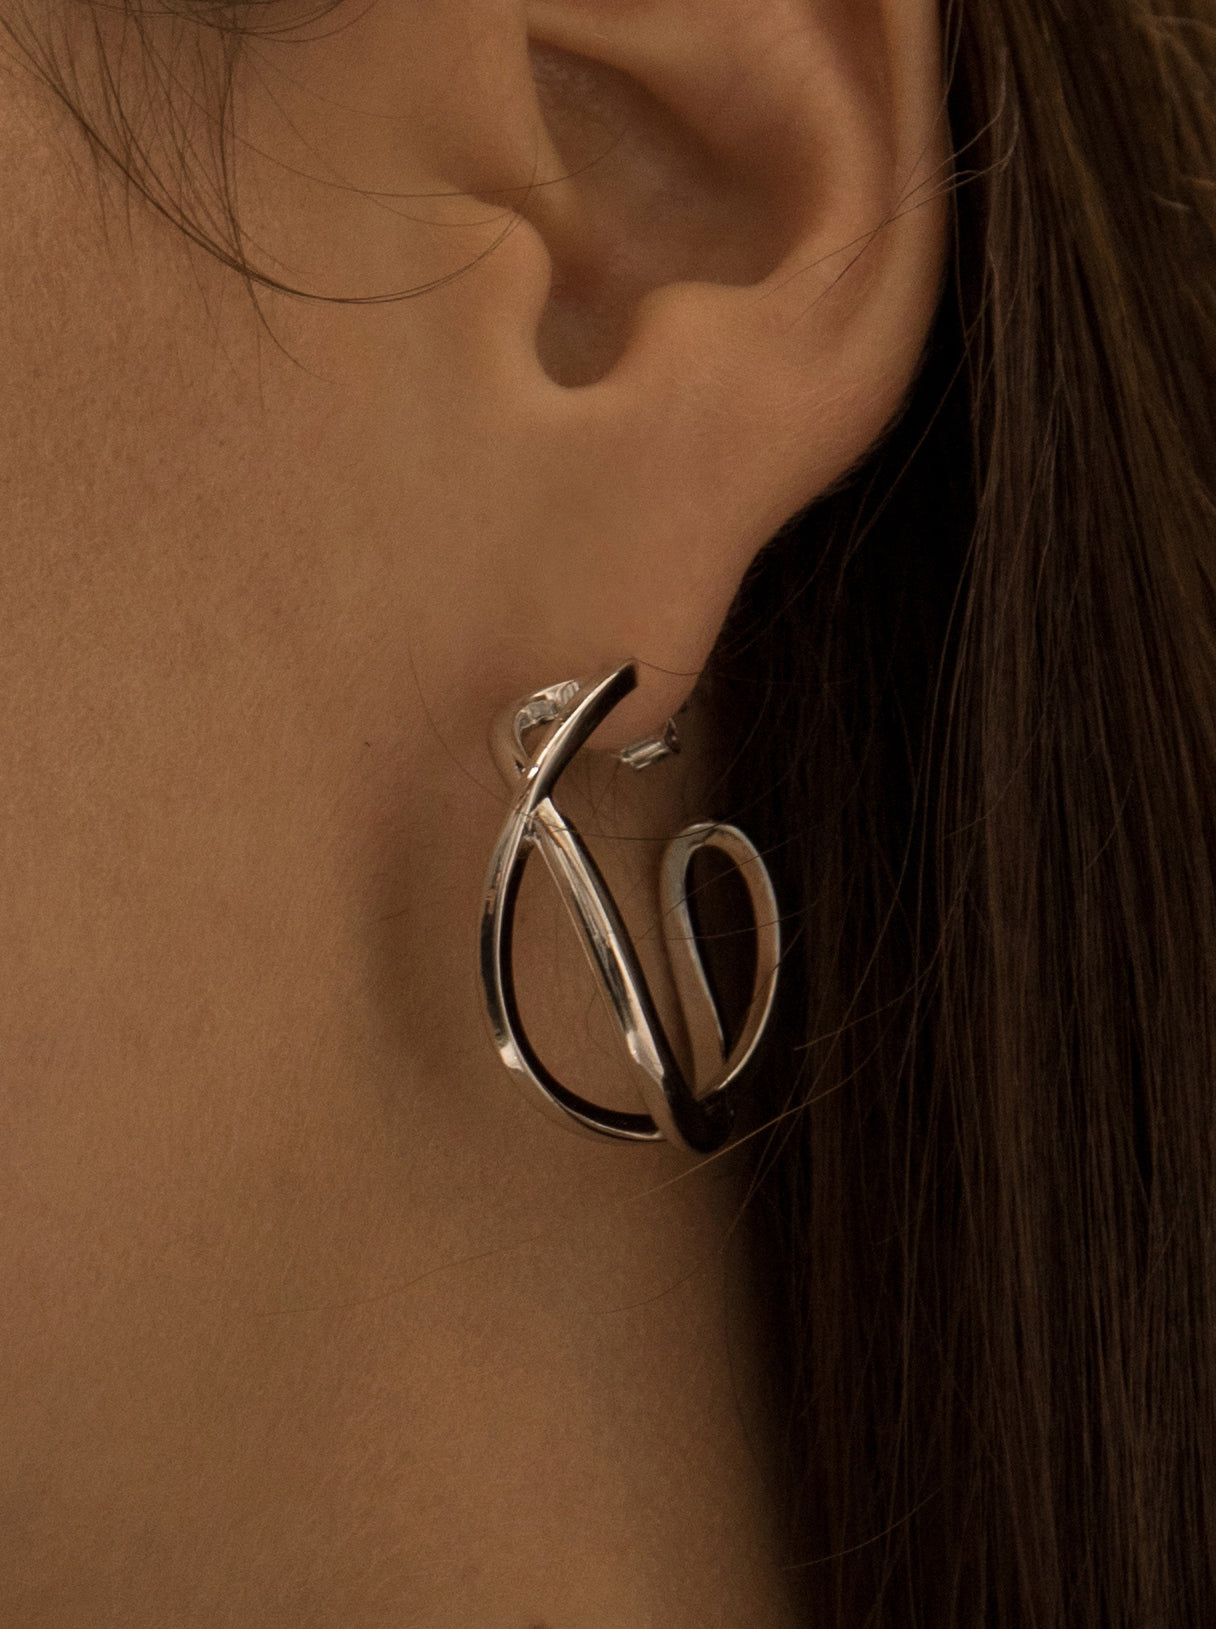 Original earrings double intertwined rail design and plain silver hoop earrings